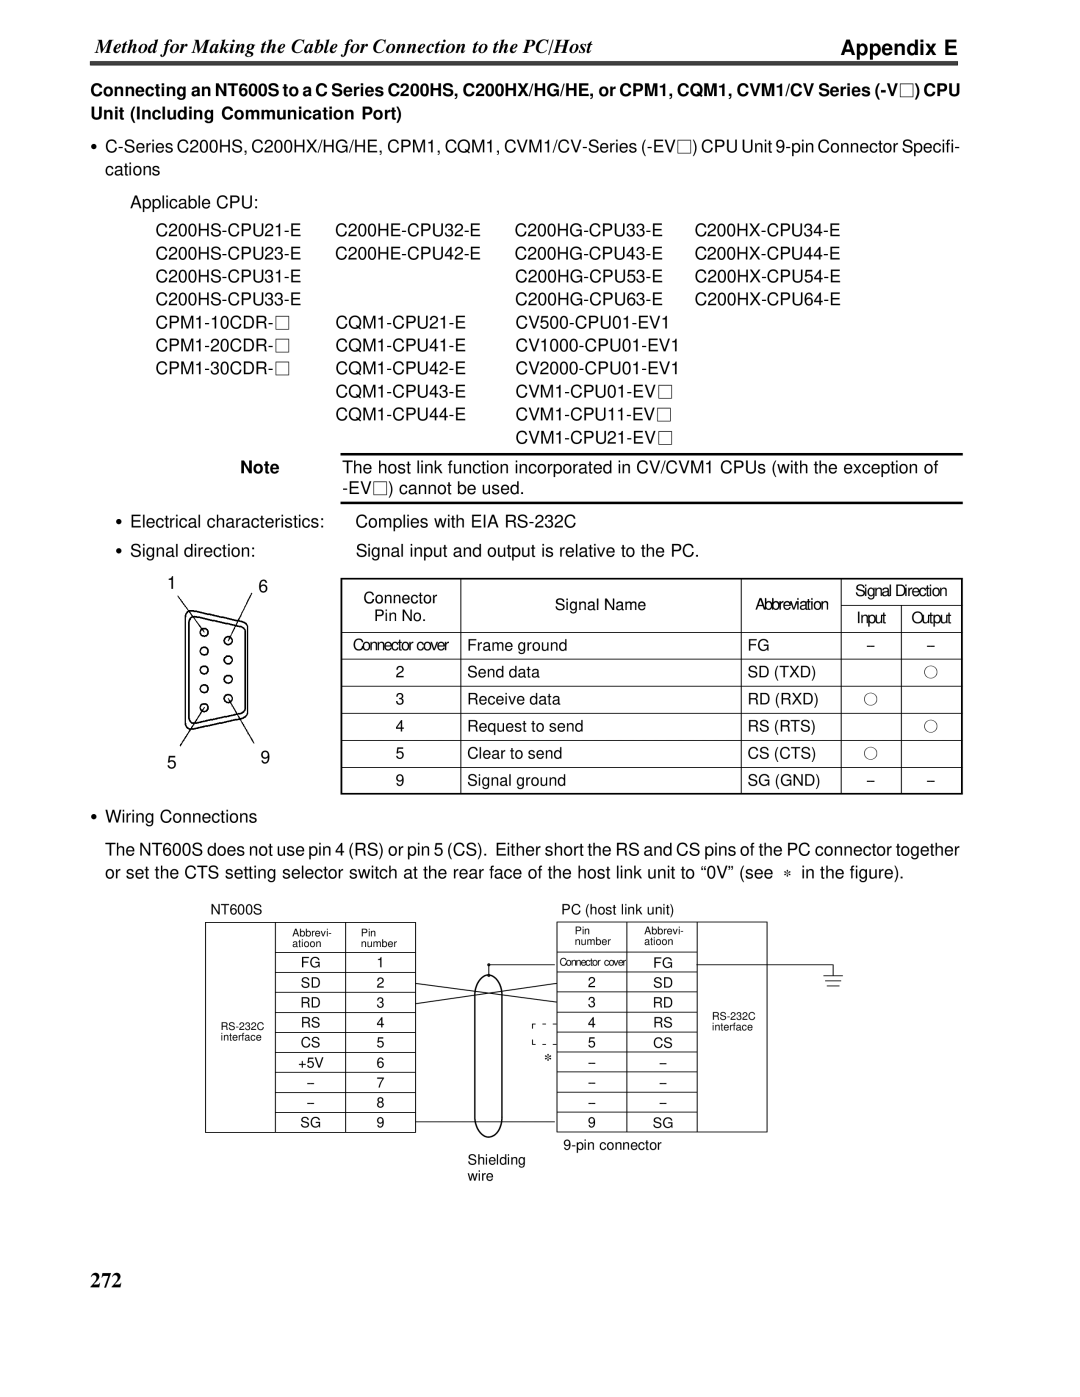 Omron V022-E3-1 operation manual Appendix E, Applicable CPU 